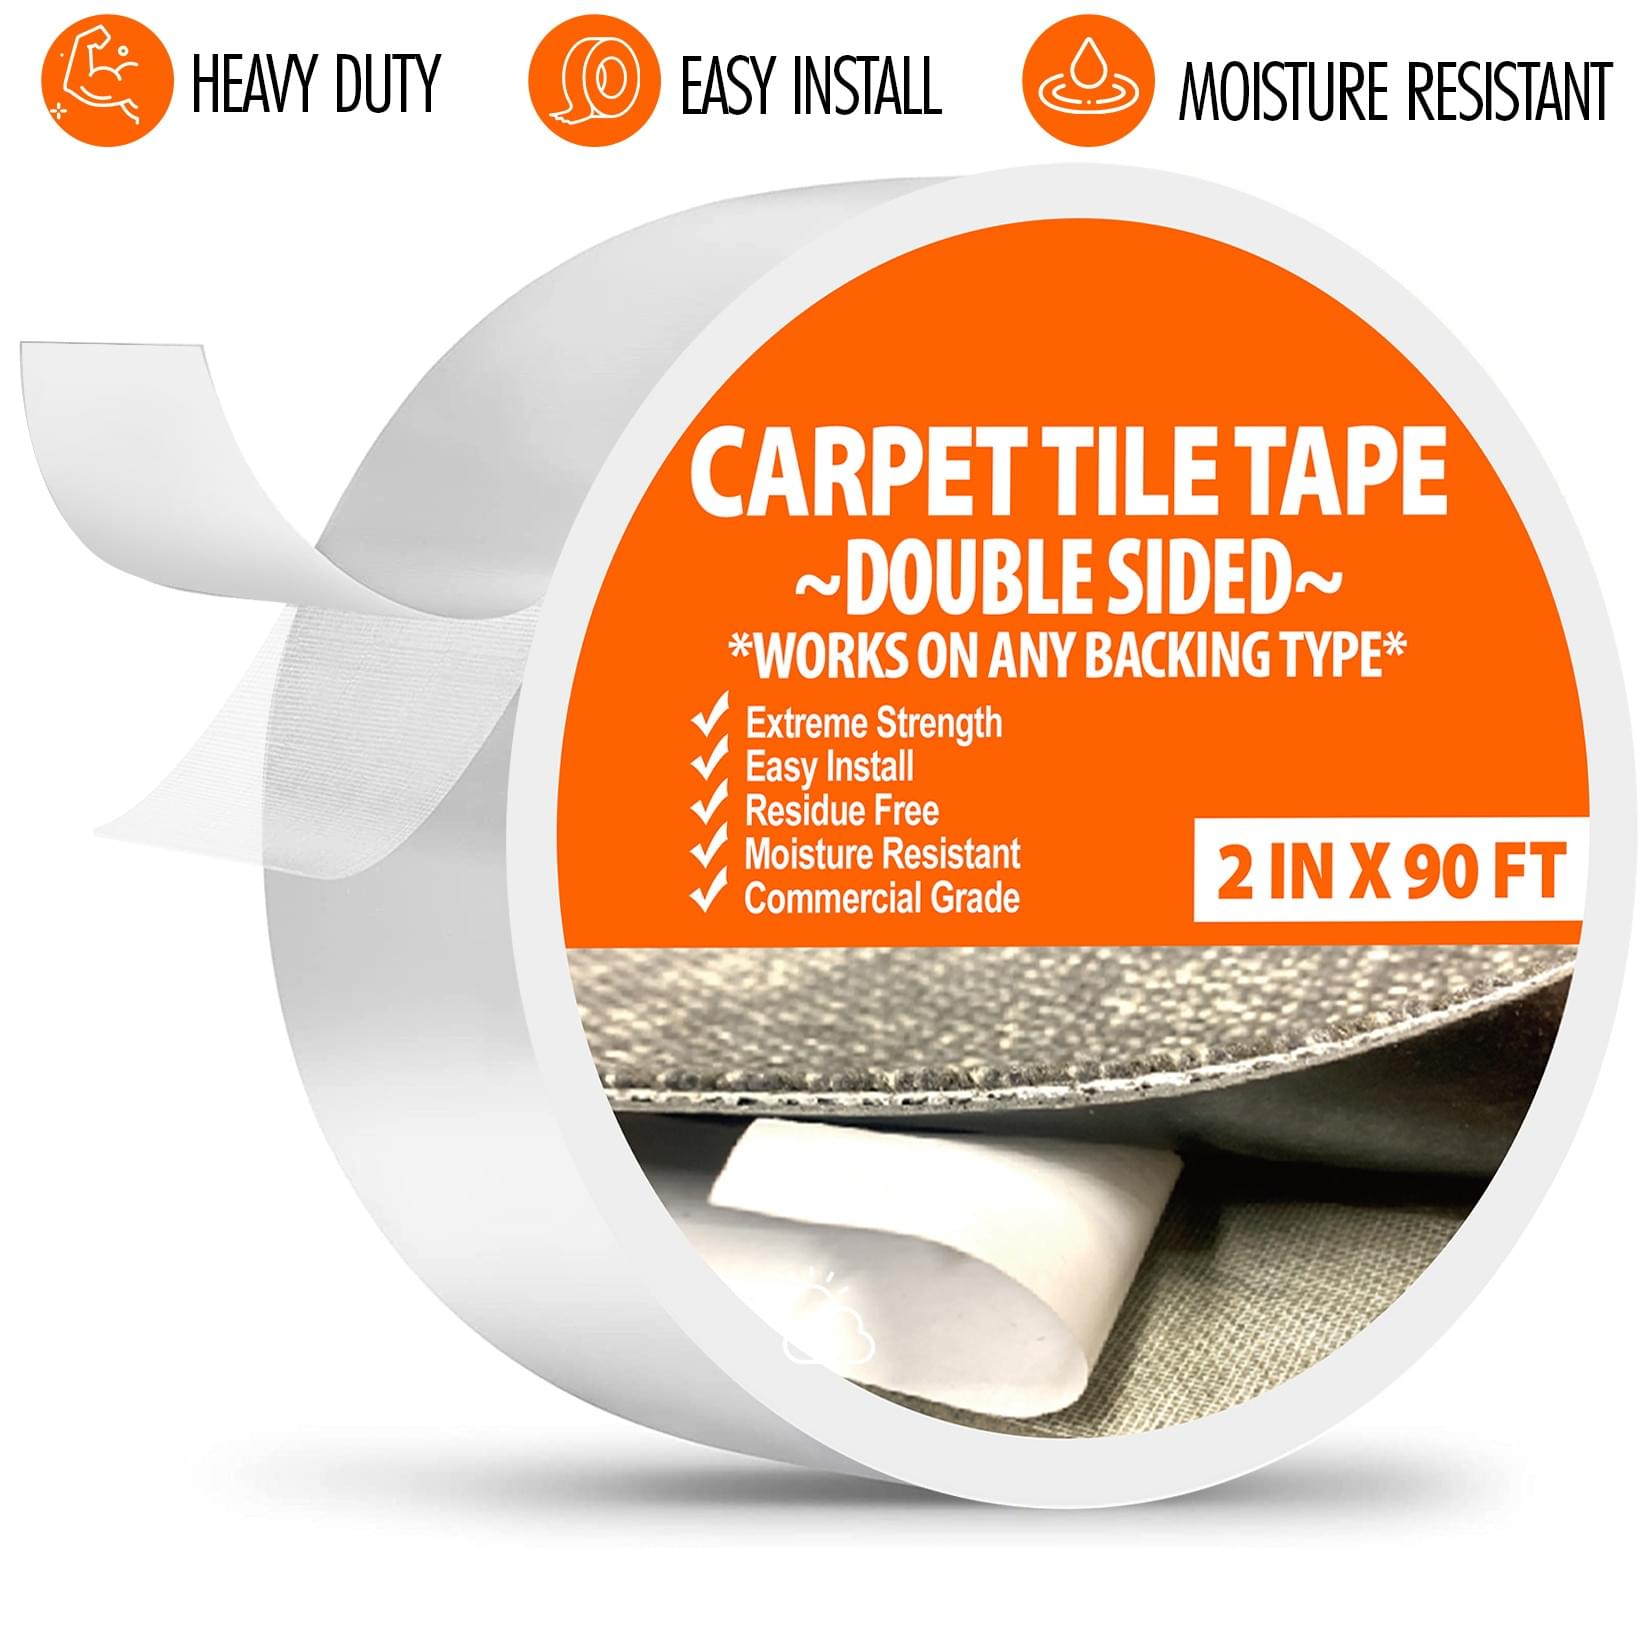 https://allflooringnow.com/hosted/images/2e/2a593ddf924764a019e9f1d1507983/Carpet-Tape-Double-Sided-Heavy-Duty-Rug-Tape-Tile-Tape-Vinyl-Tape-Double-Stick-Tape-Strong-Double-Stick-Tape-All-Flooring-Now.jpg